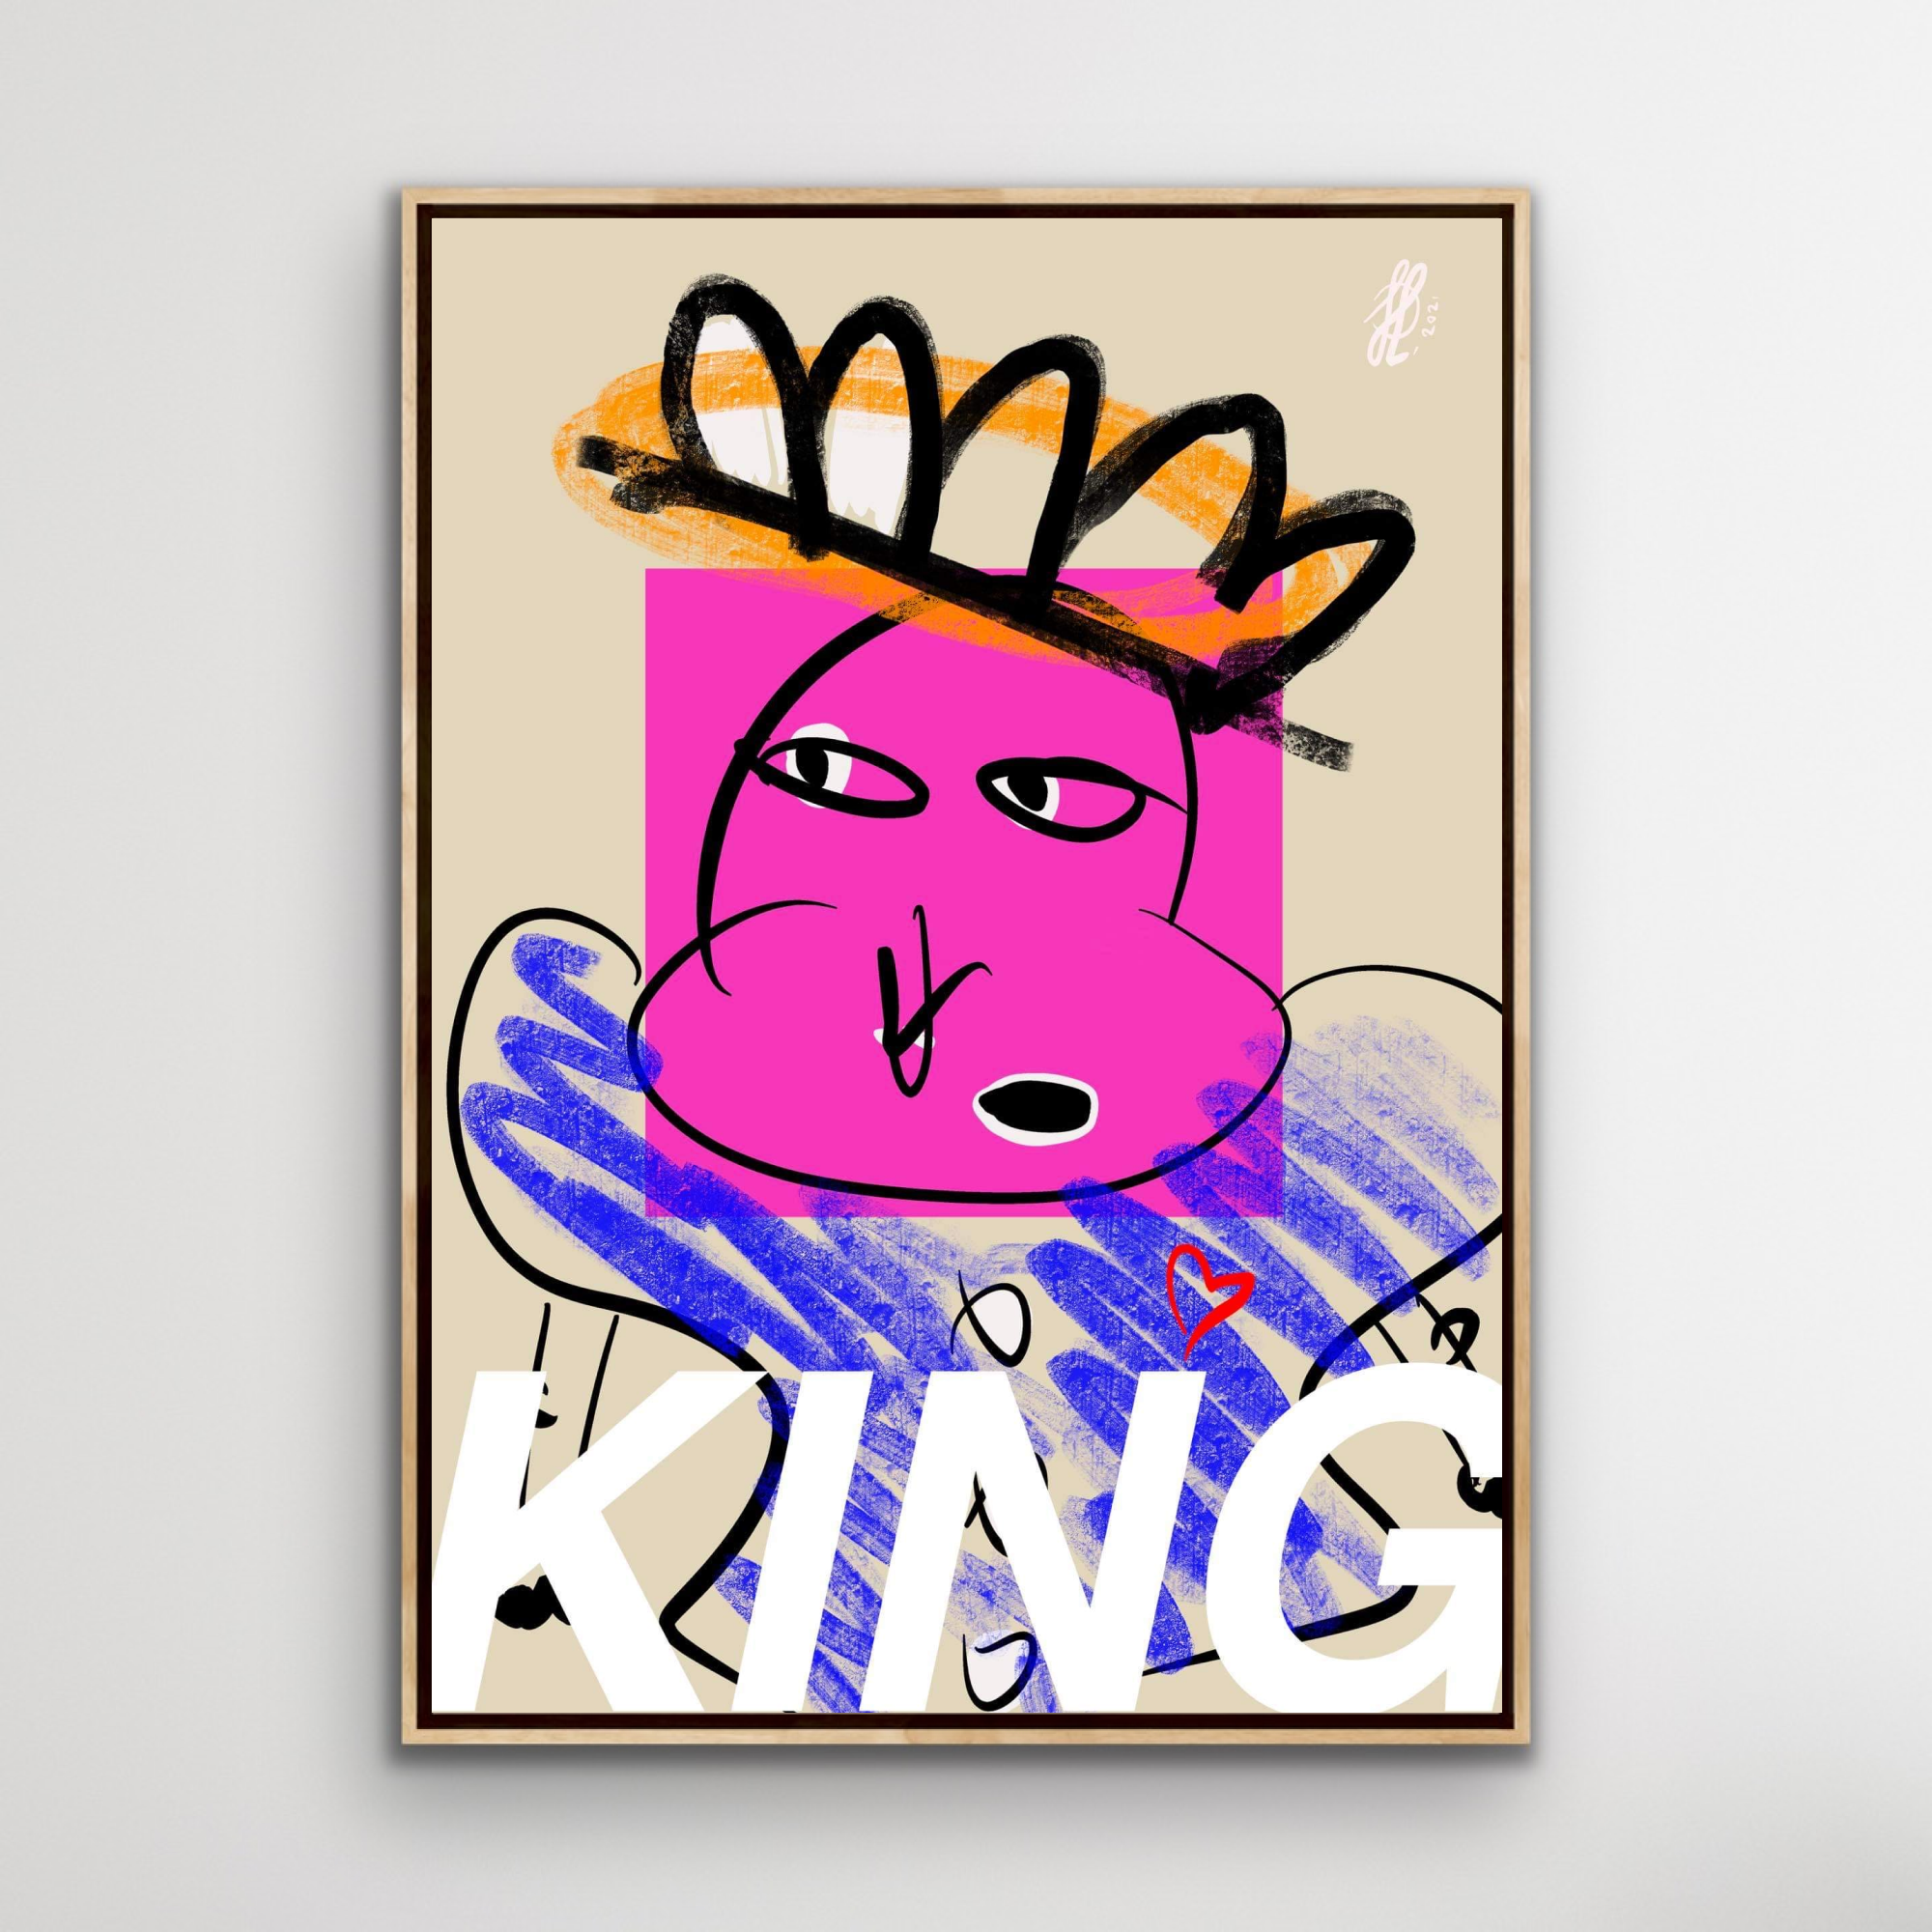 Leinwandbild: "King"